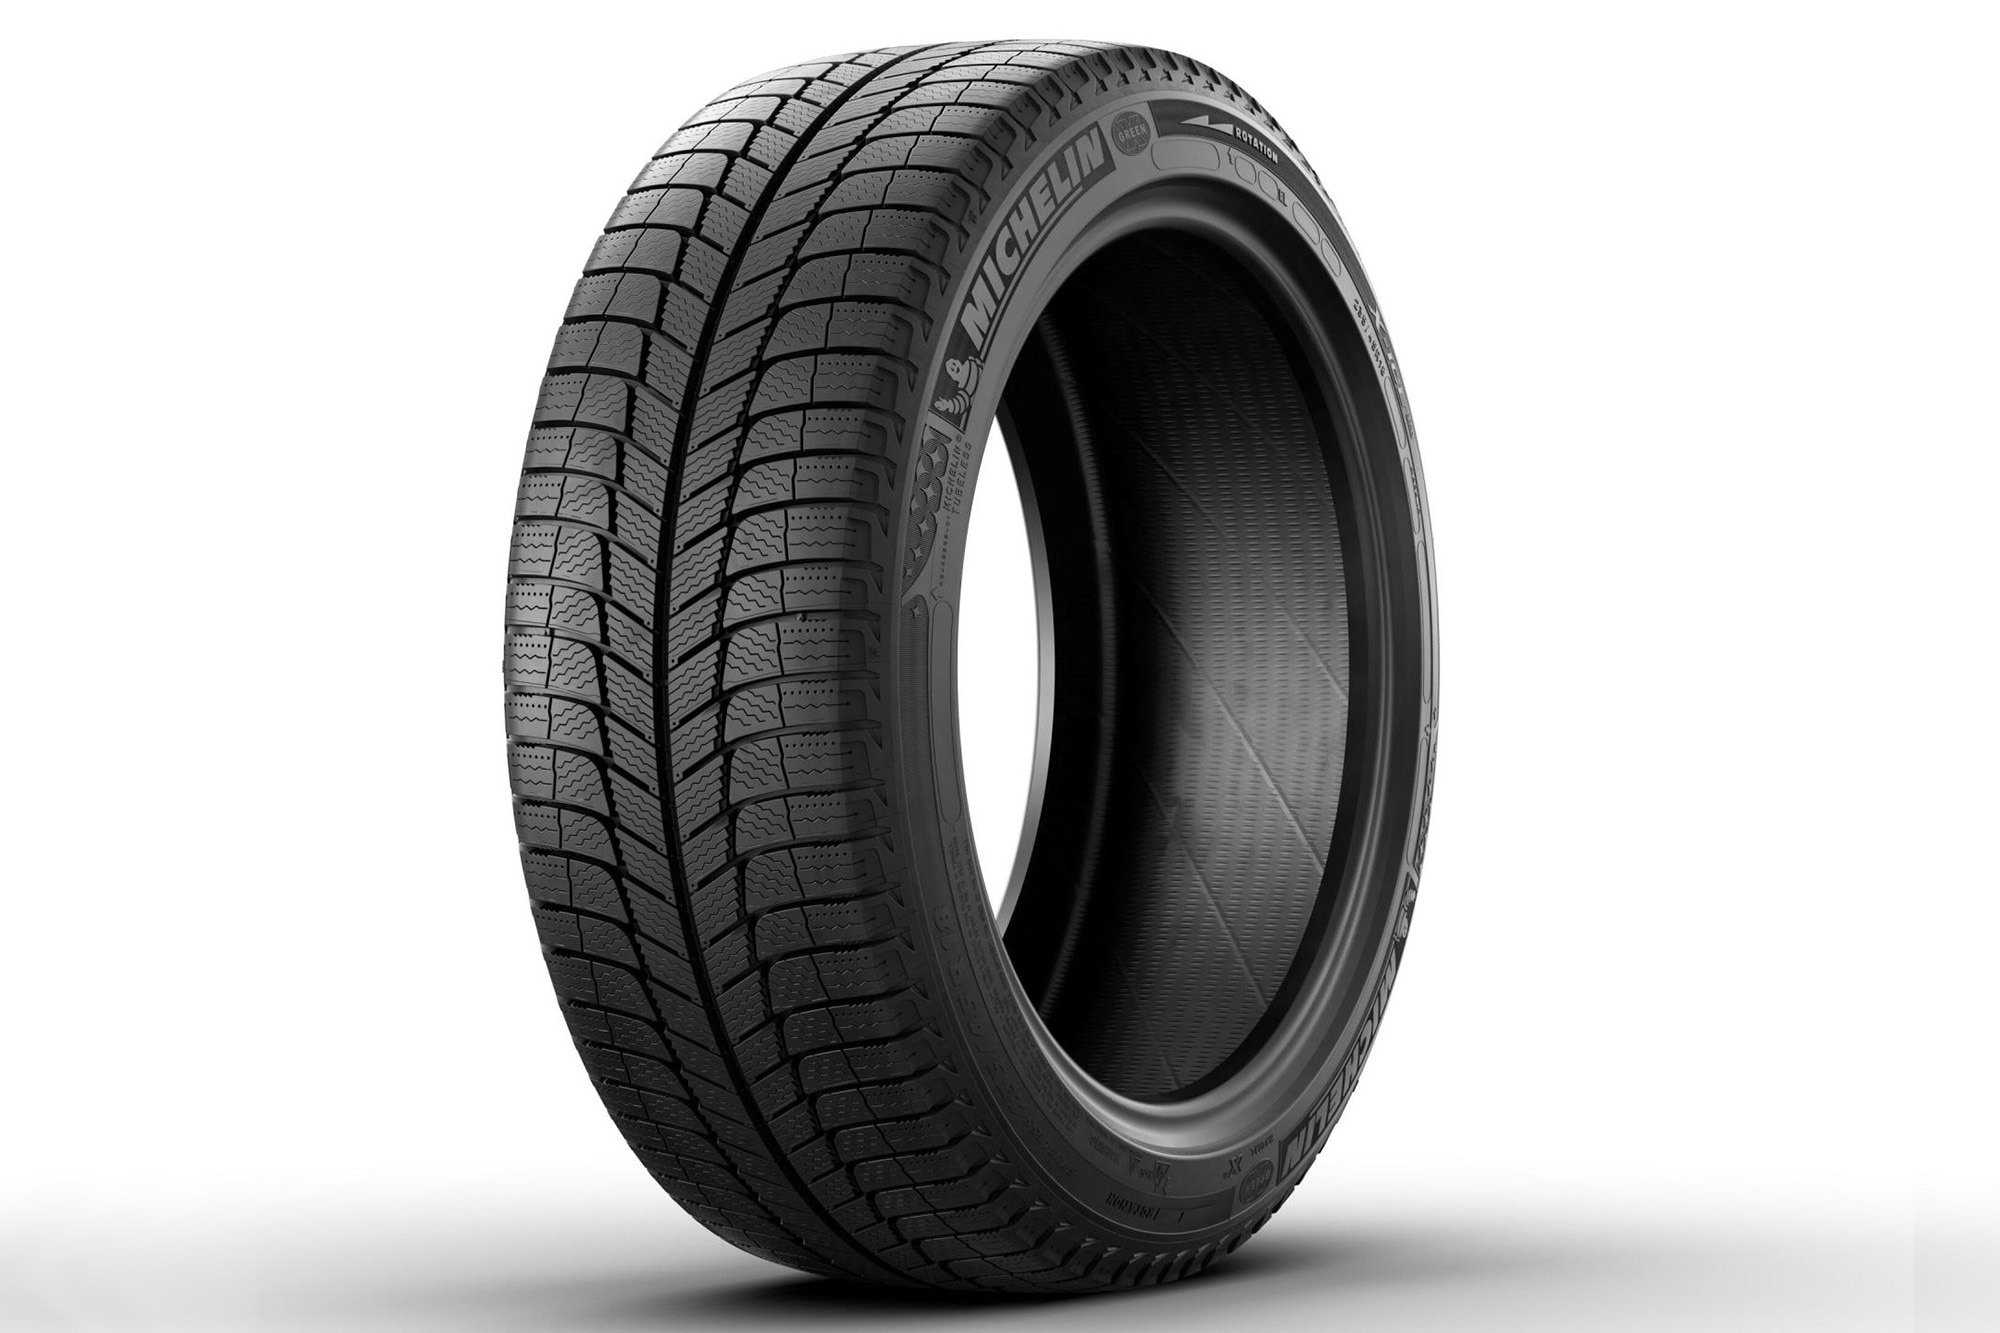 A Michelin XICE XI3 directional tire